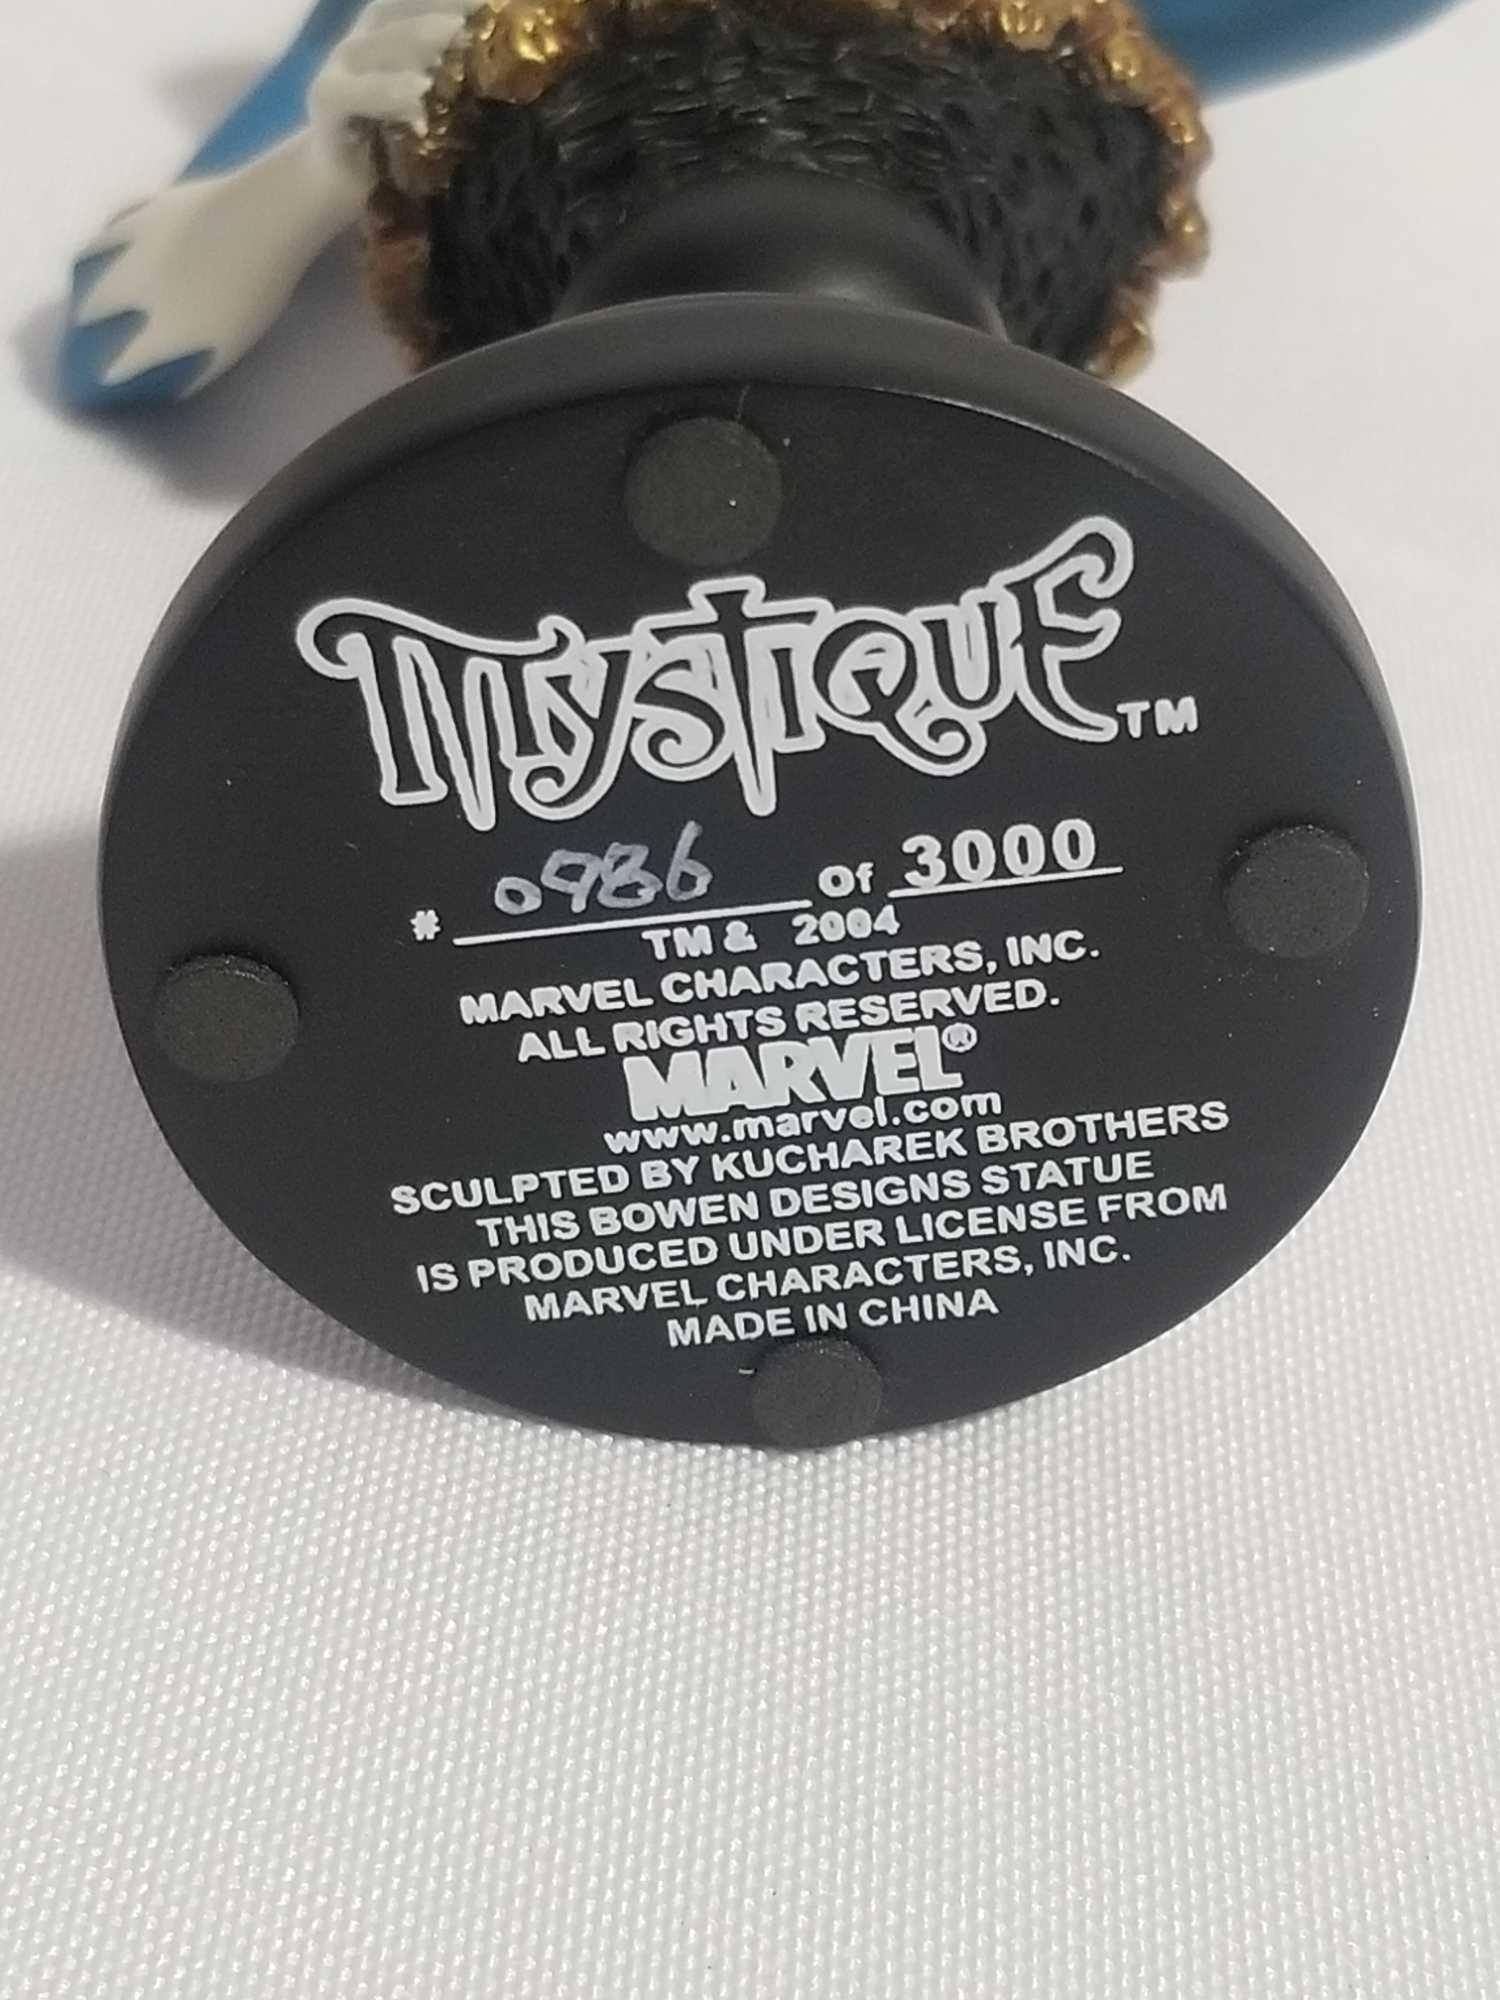 2005 Bowen Designs Marvel Mystique Limited Edition Bust